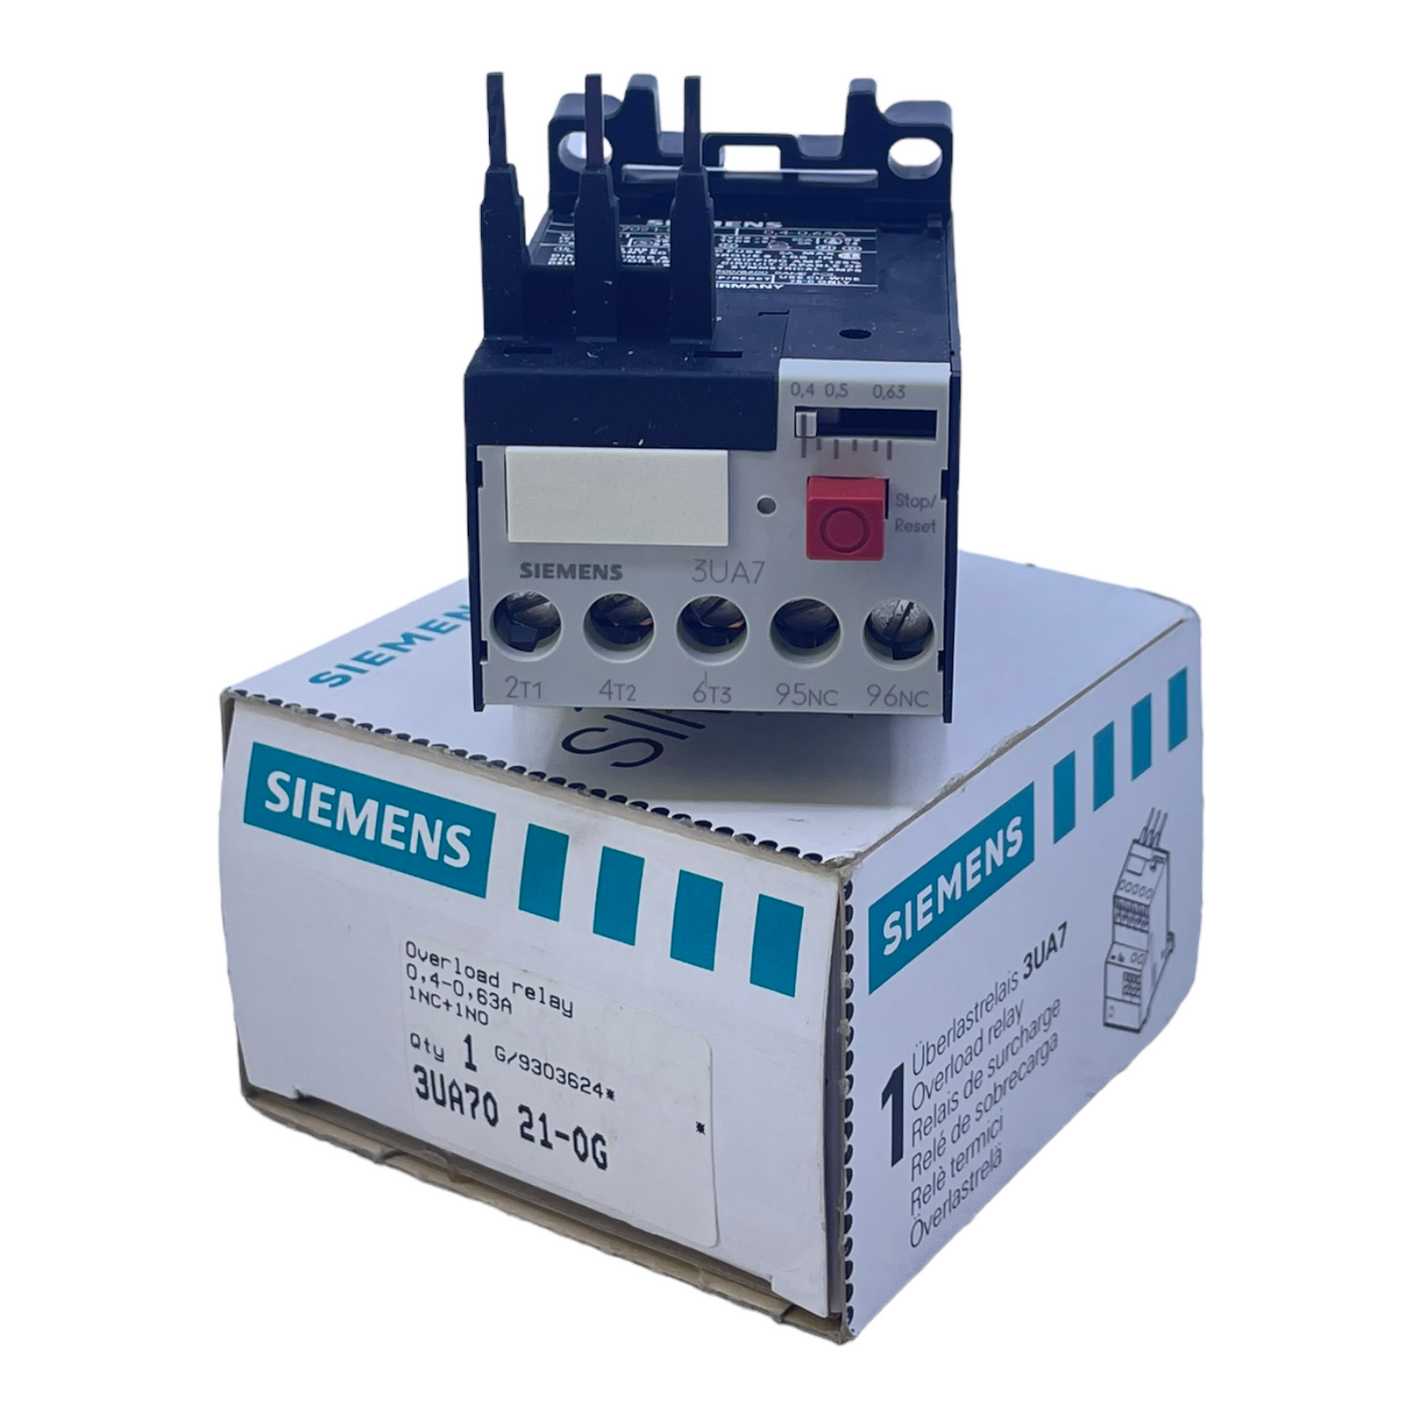 Siemens 3UA7021-0G overload relay 0.4-0.63A